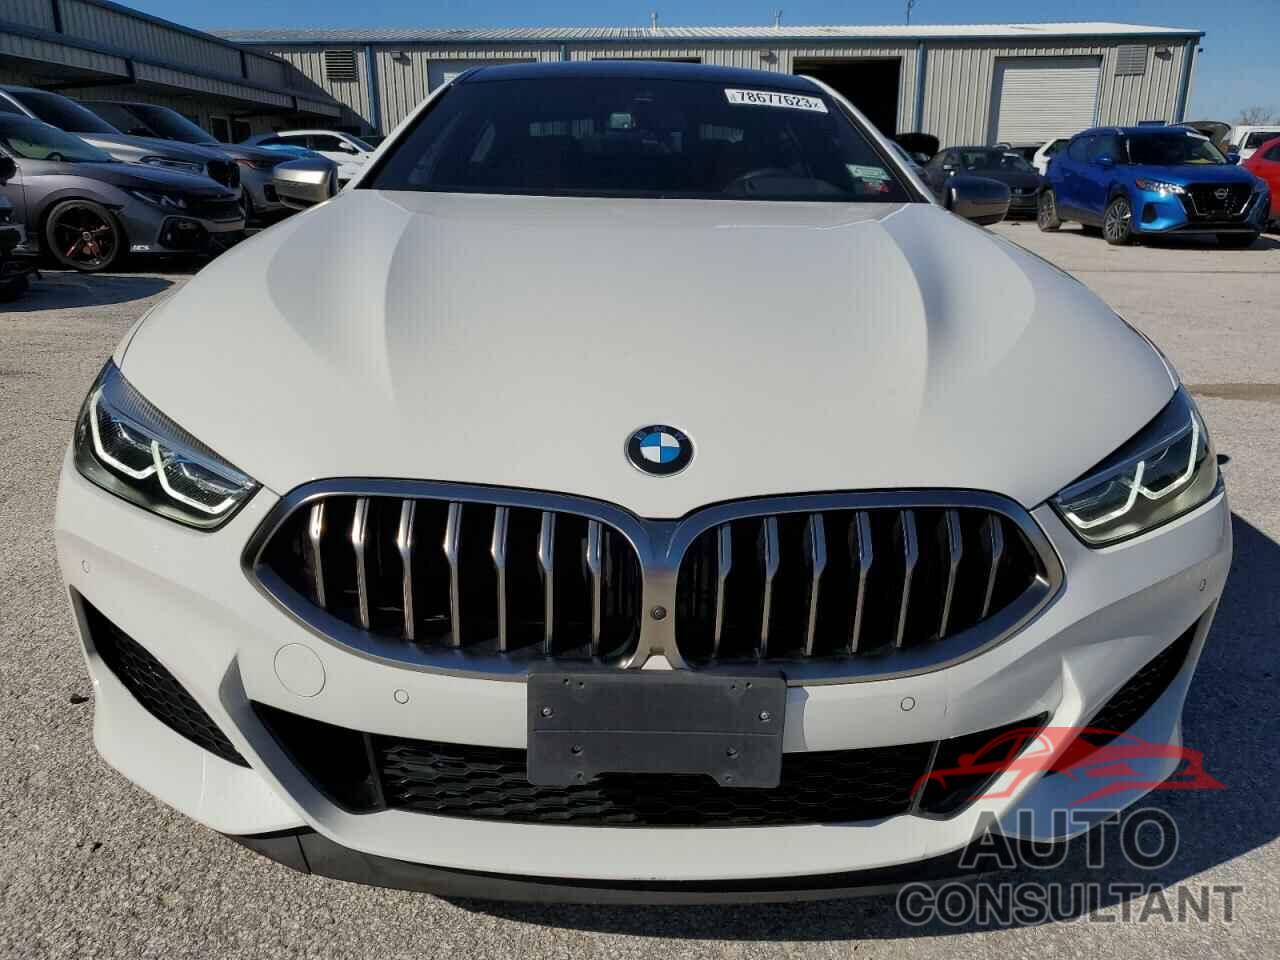 BMW M8 2022 - WBAGV8C03NCK03817